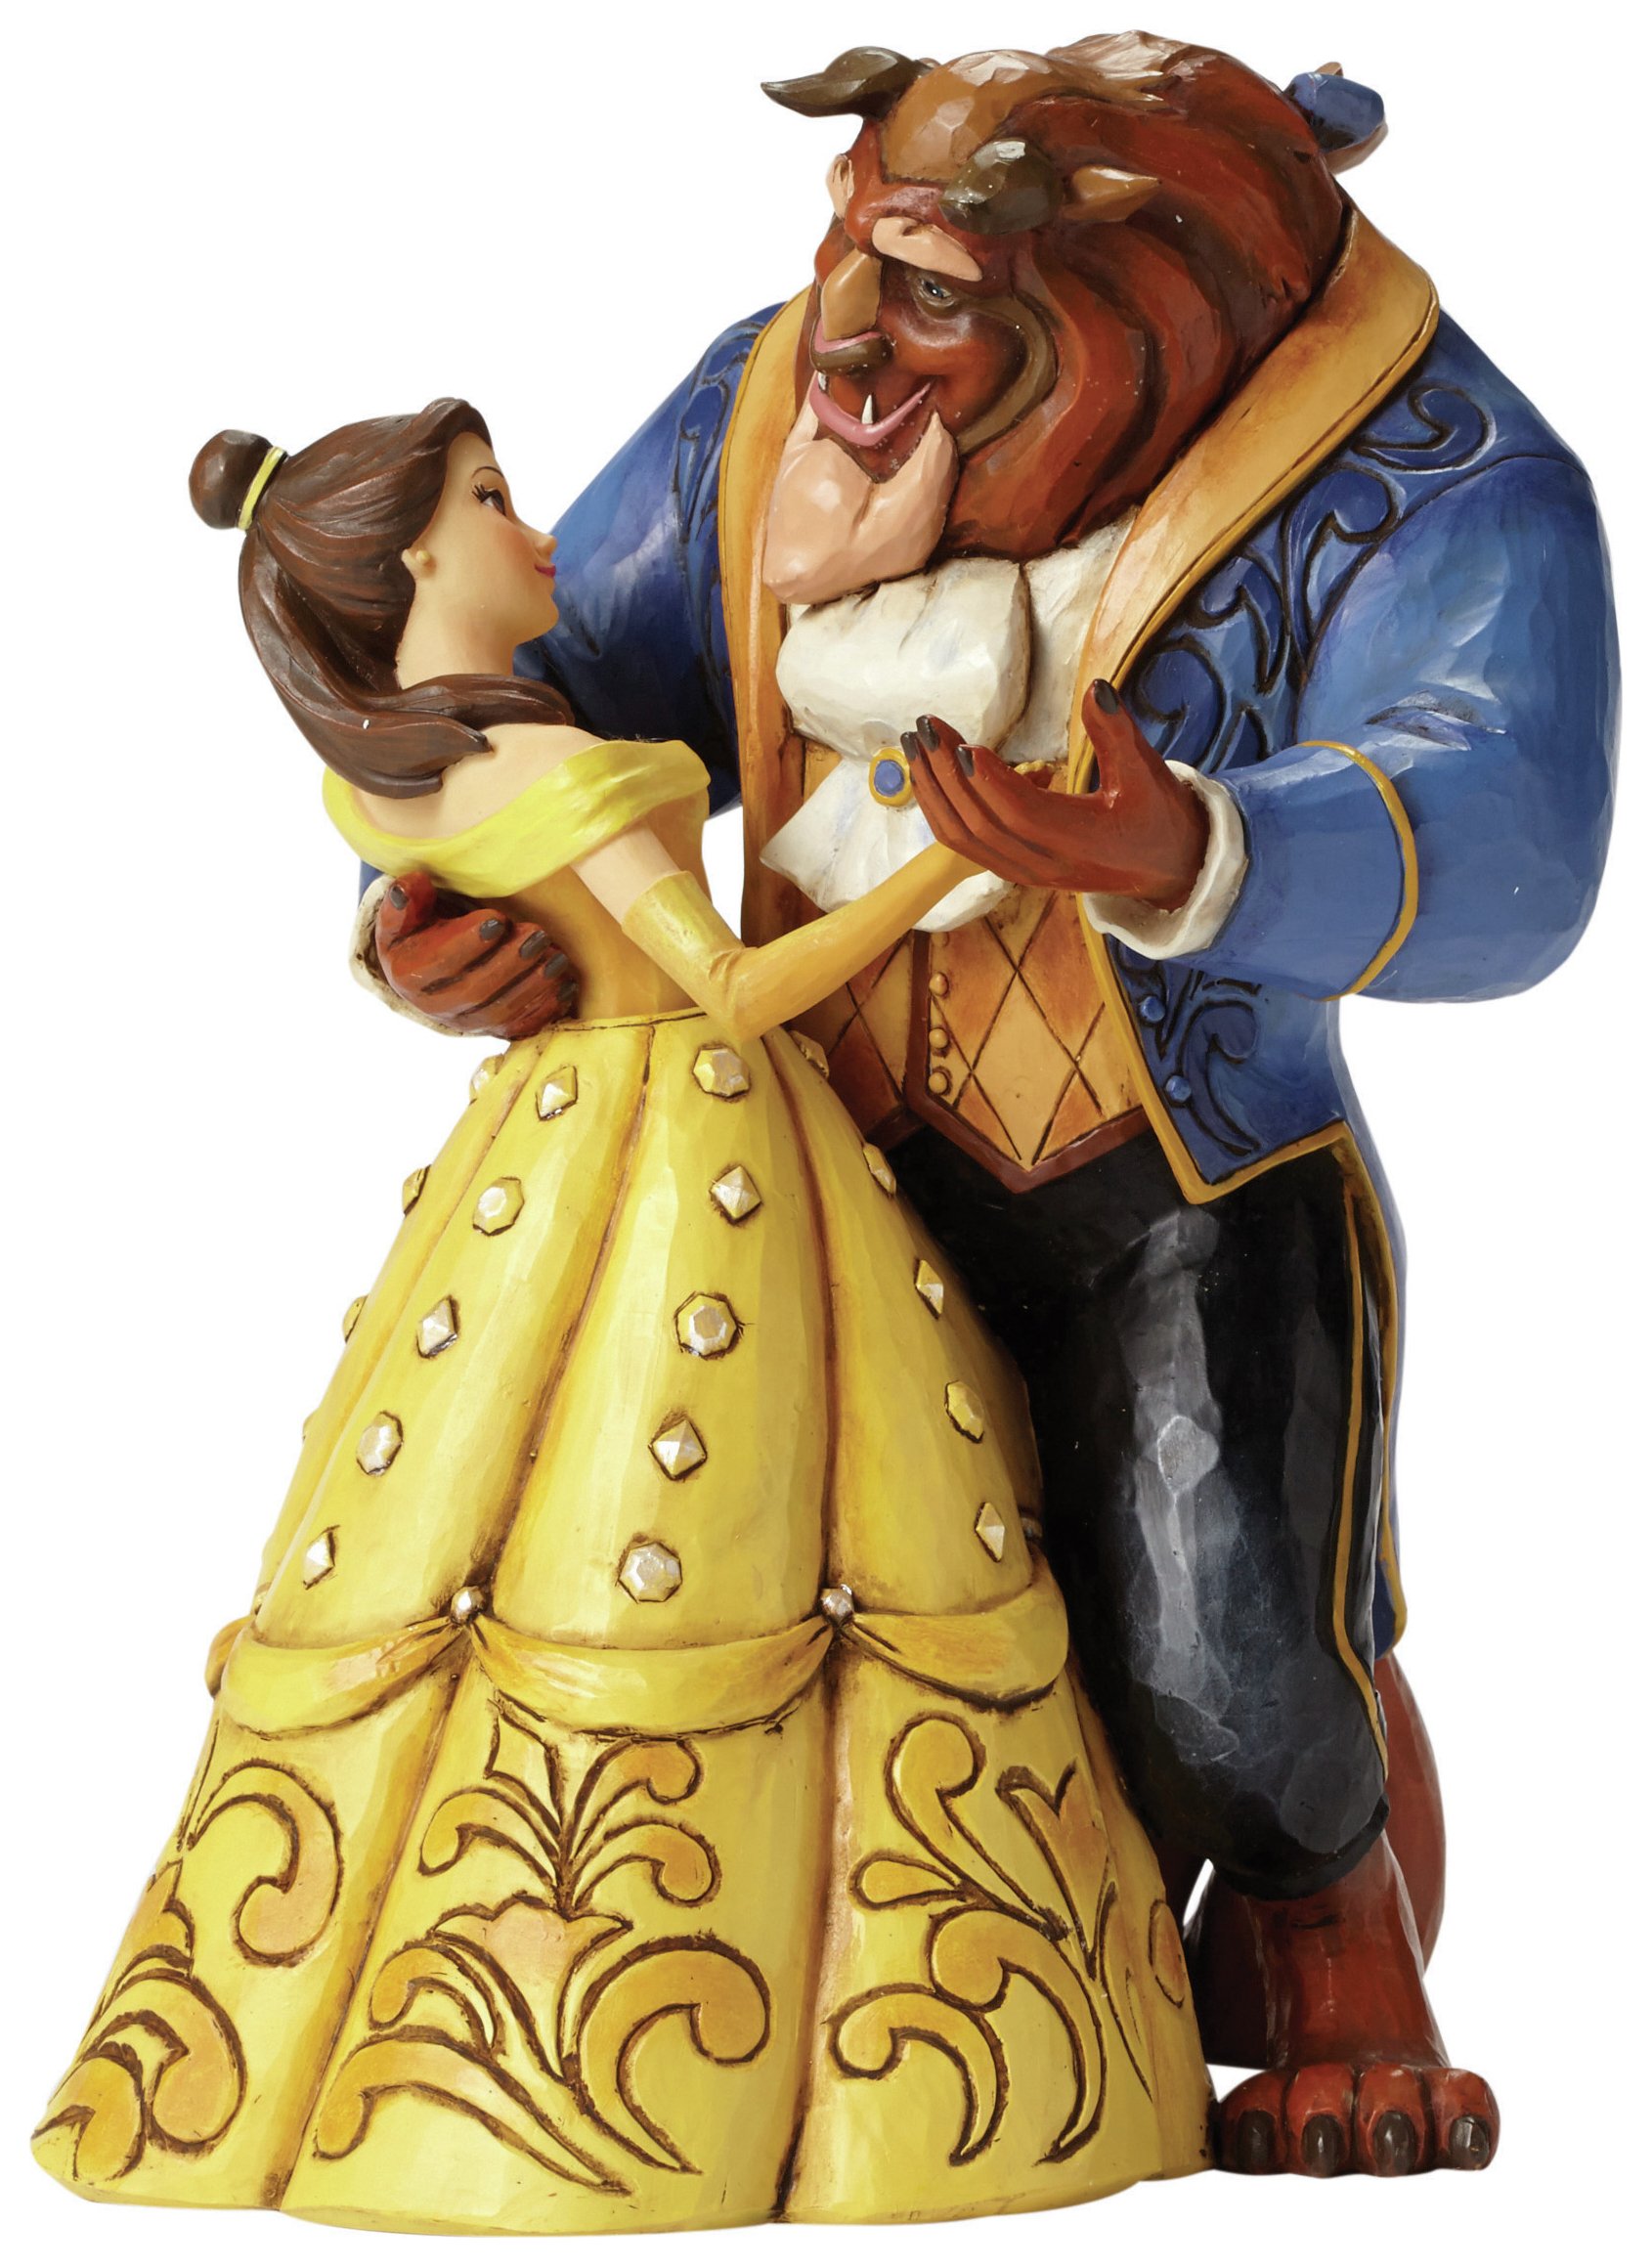 Disney Traditions Moonlight Waltz Belle & Beast Figurine.